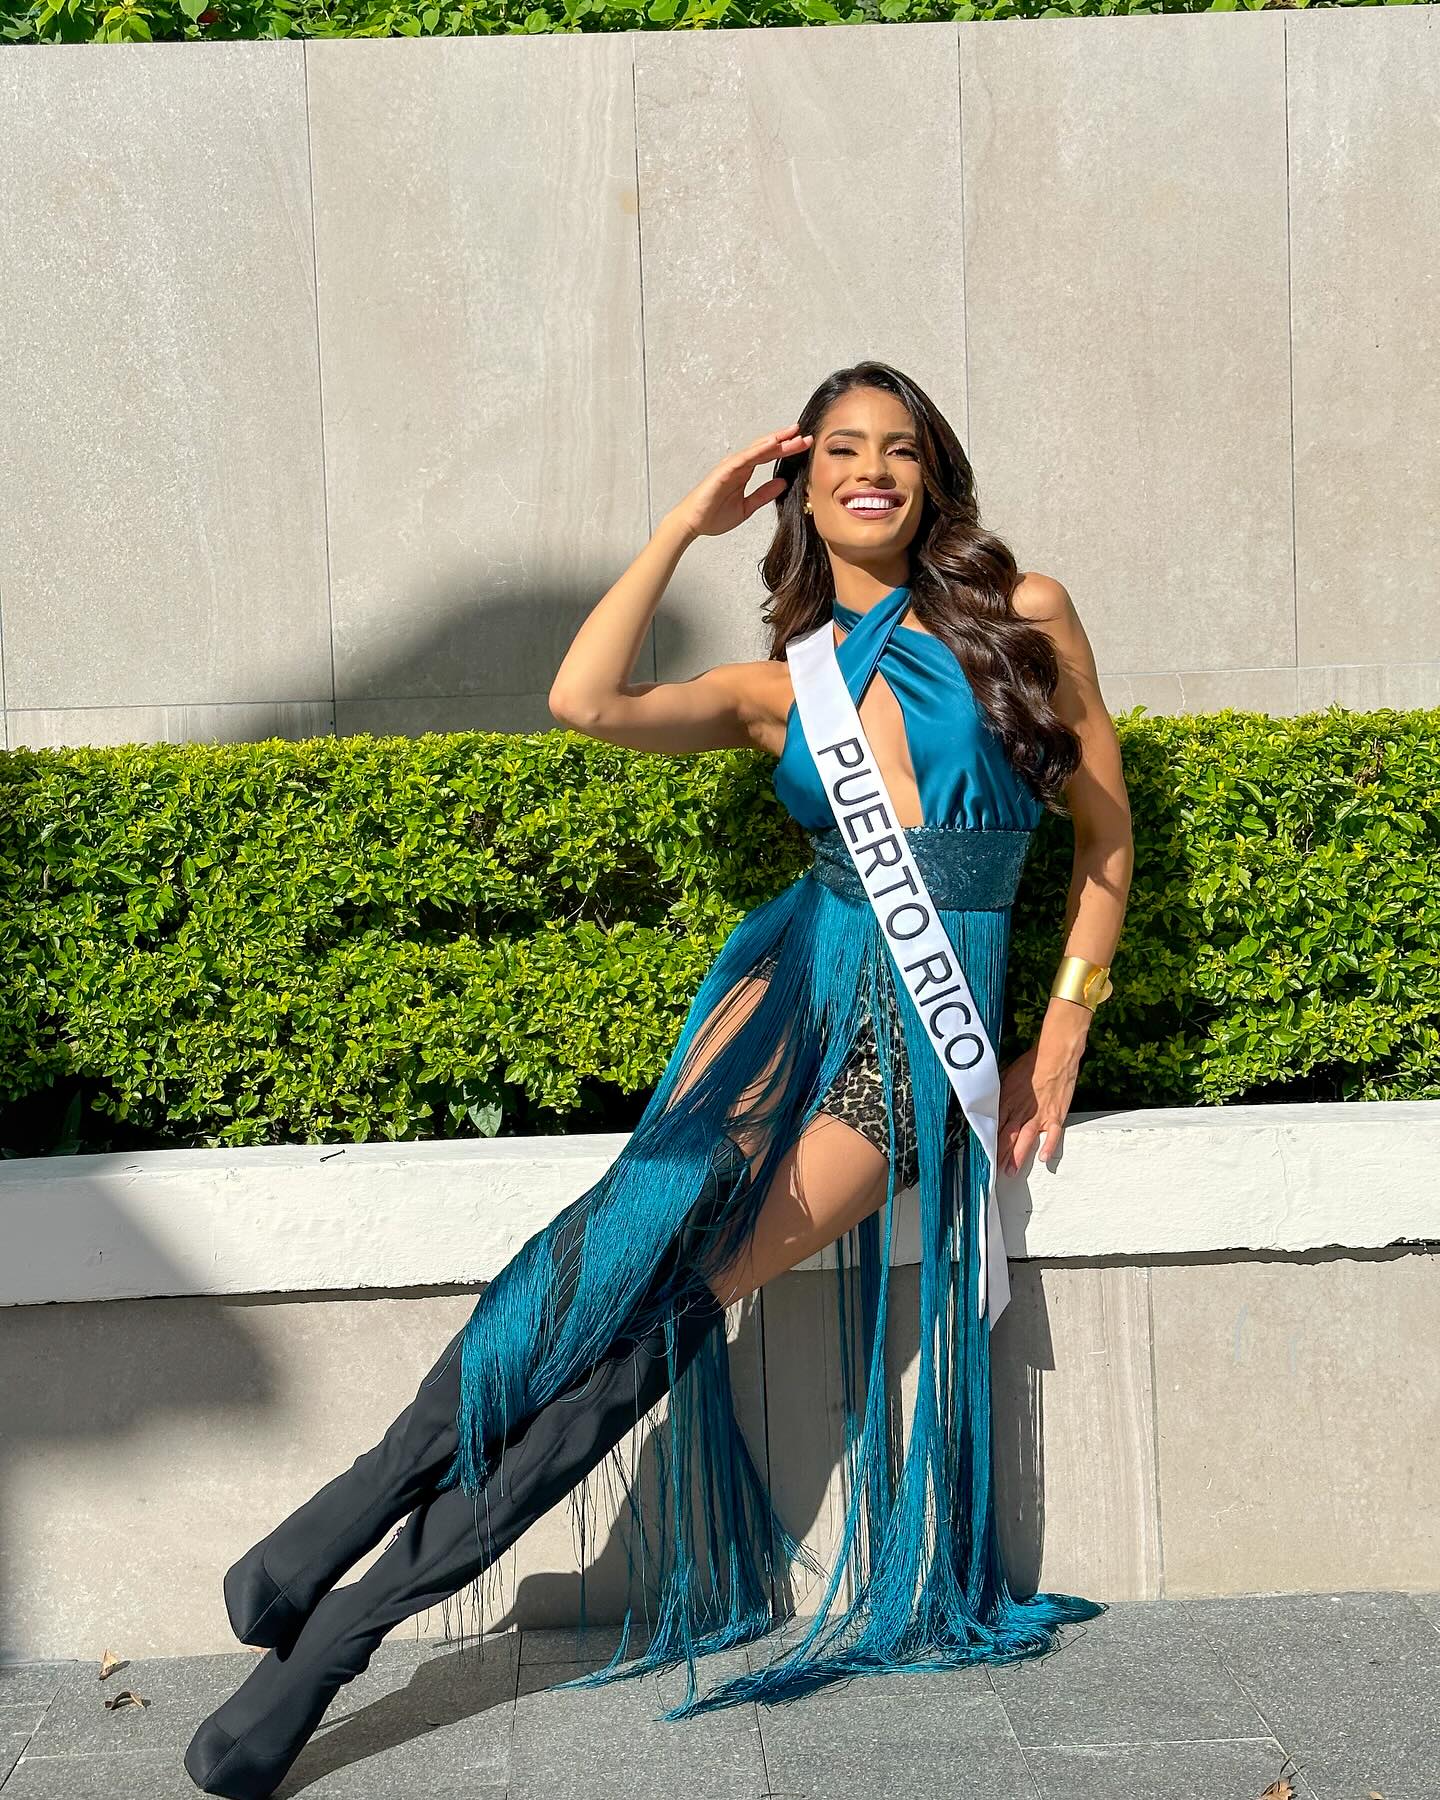 karla guilfu, top 5 de miss universe 2023/1st runner-up de miss supranational 2021. - Página 21 43050610